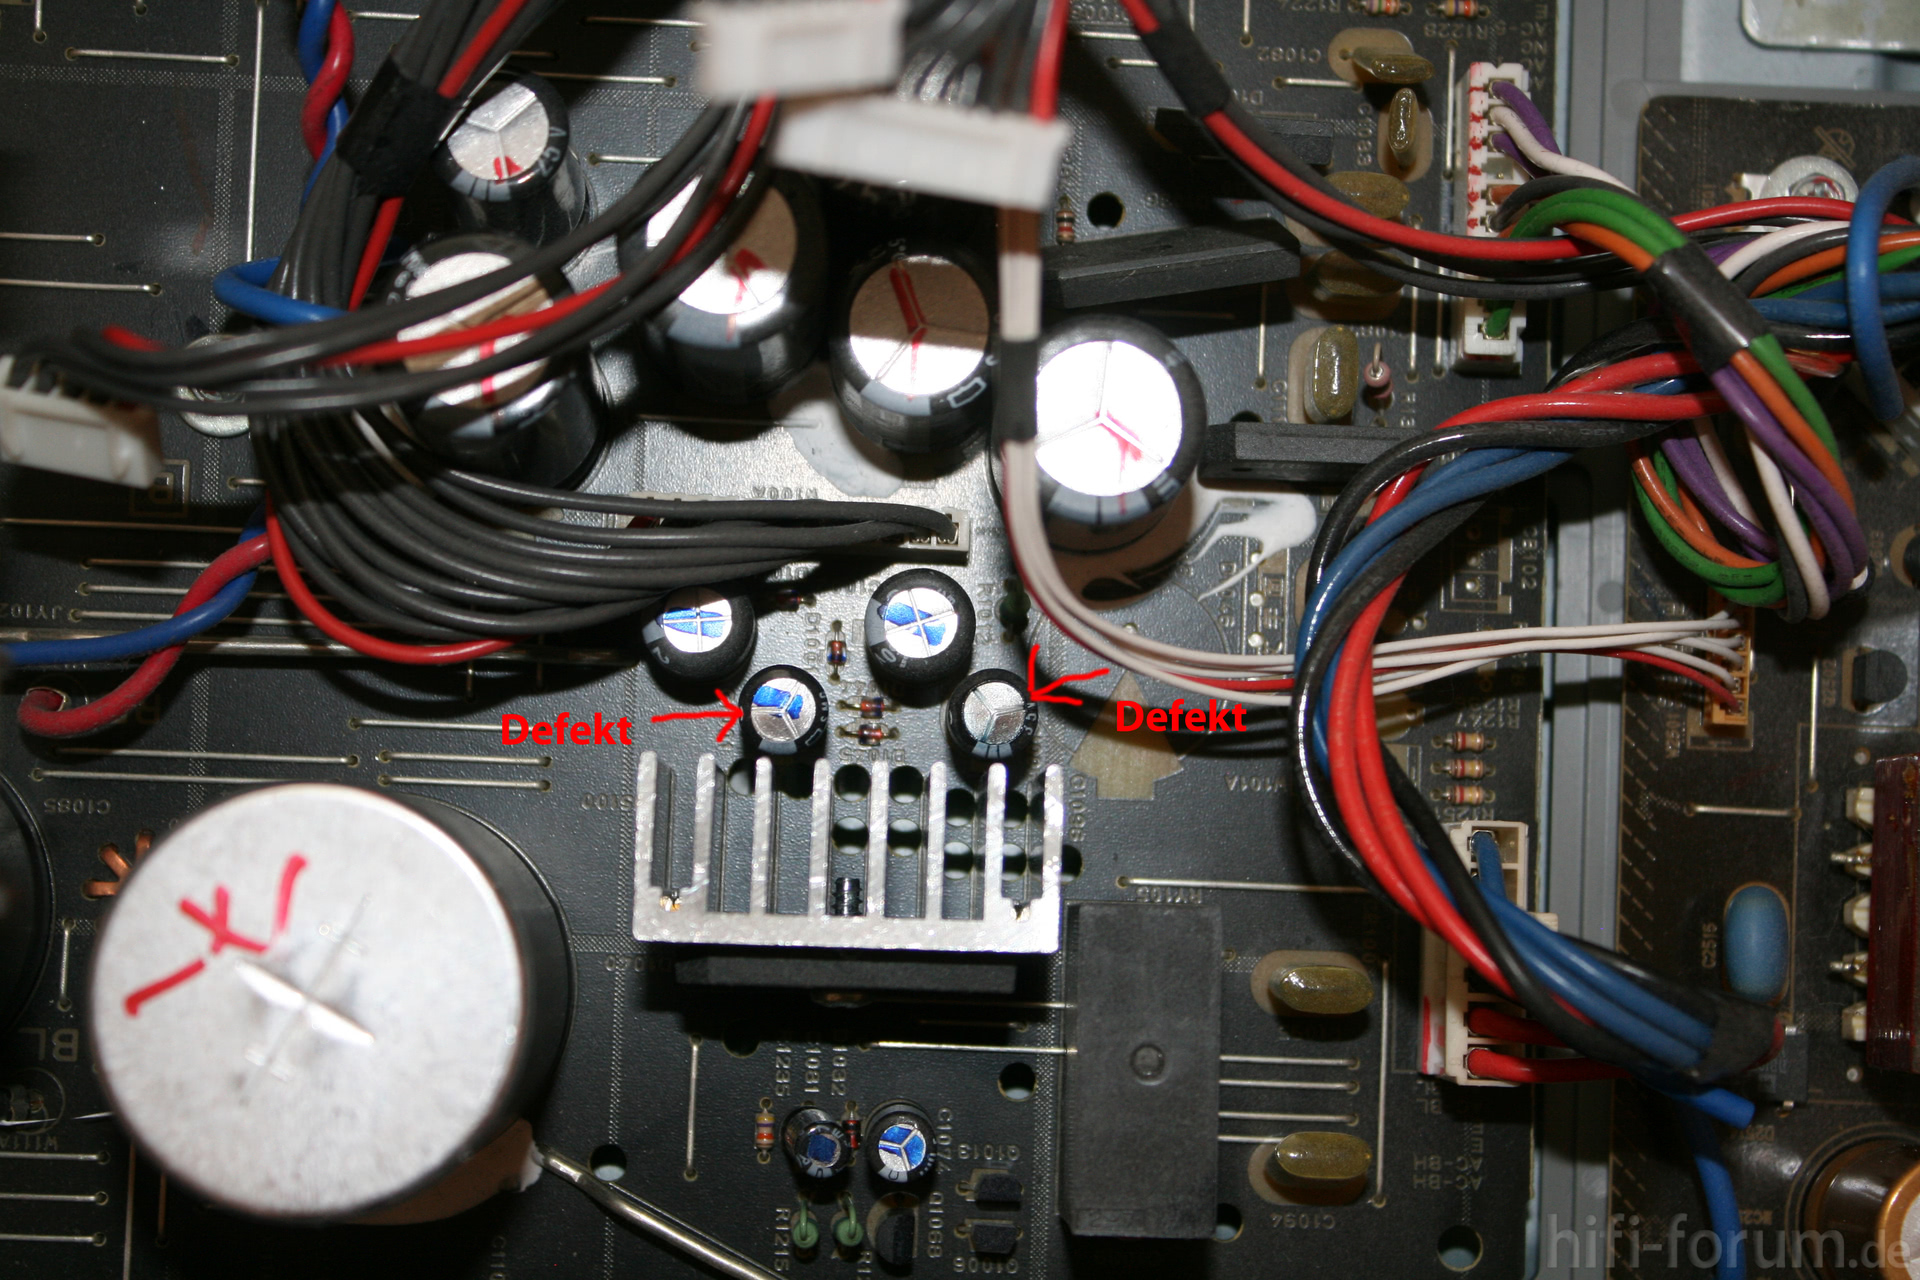 Defekte Kondensatoren | defekt, defekte, display, kondensatoren, rxv661